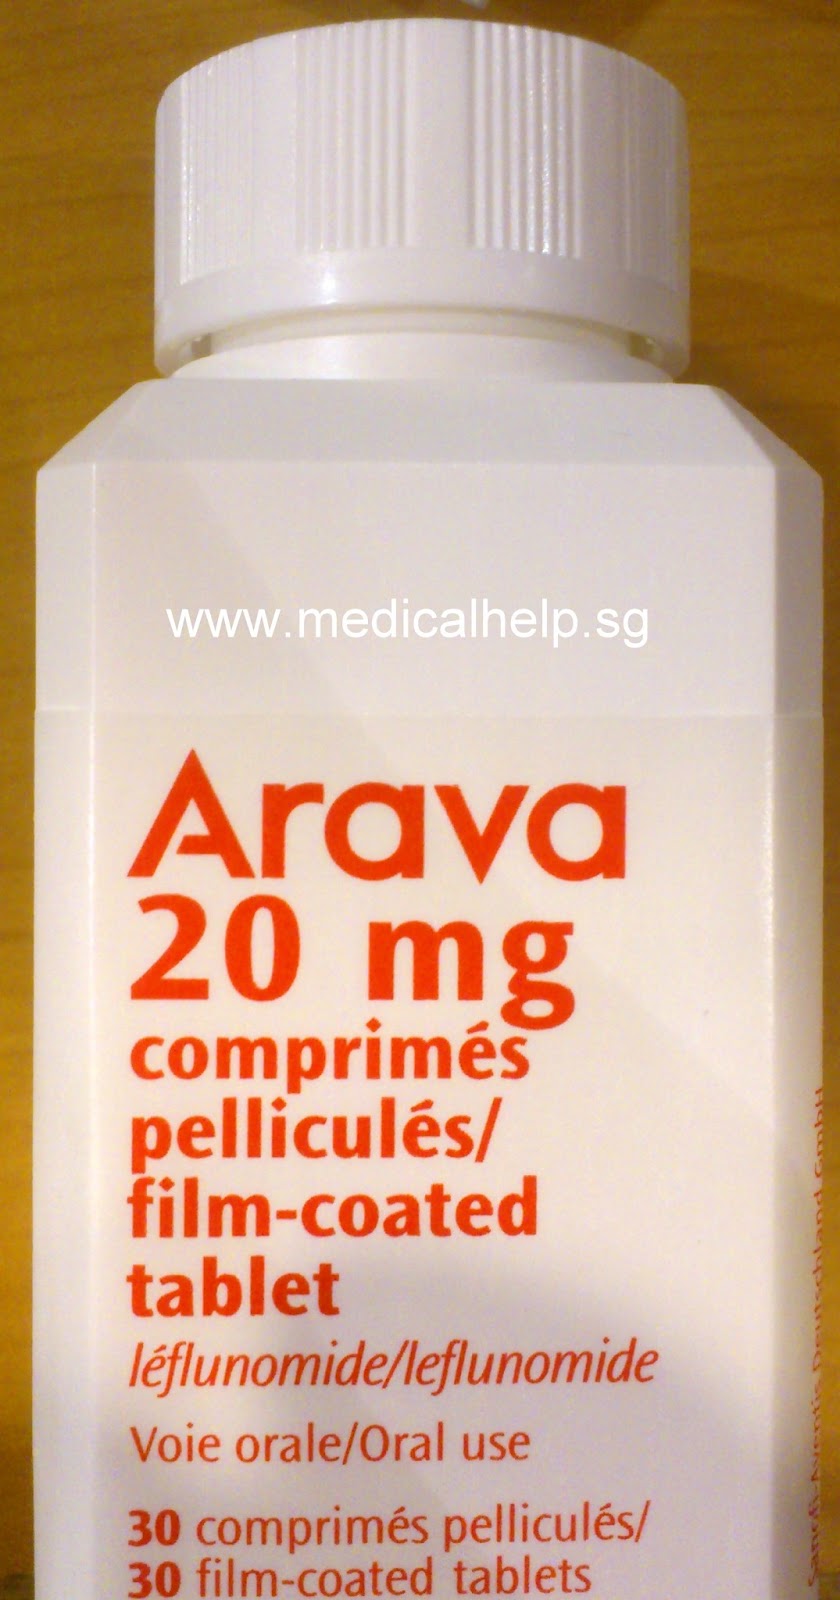 arava the price